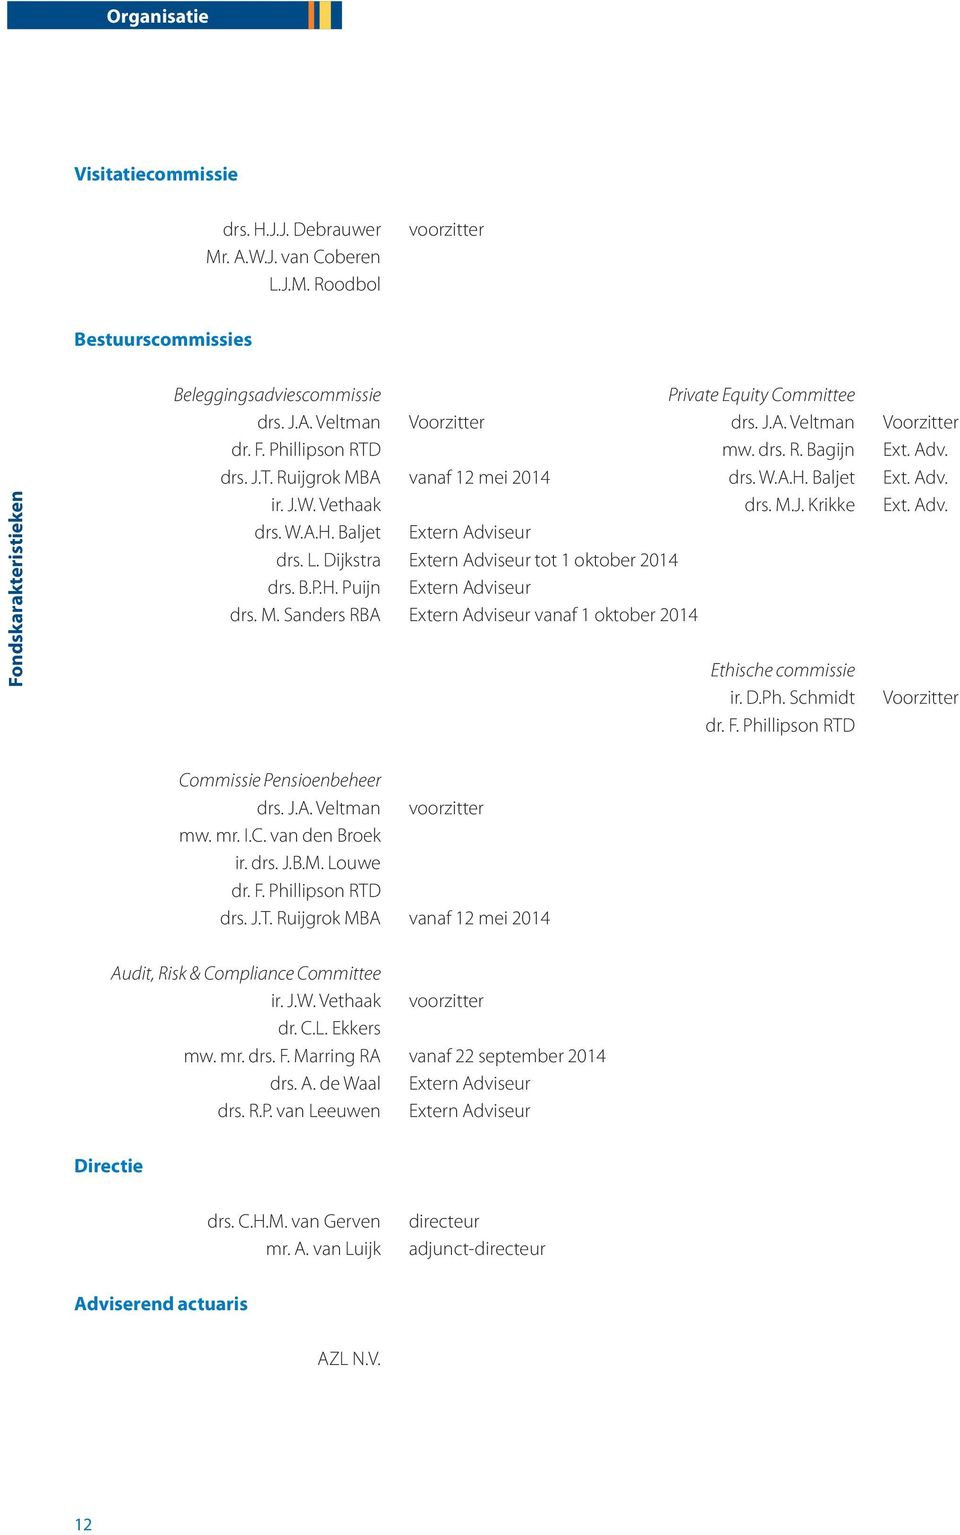 Adv. drs. W.A.H. Baljet Extern Adviseur drs. L. Dijkstra Extern Adviseur tot 1 oktober 2014 drs. B.P.H. Puijn Extern Adviseur drs. M.